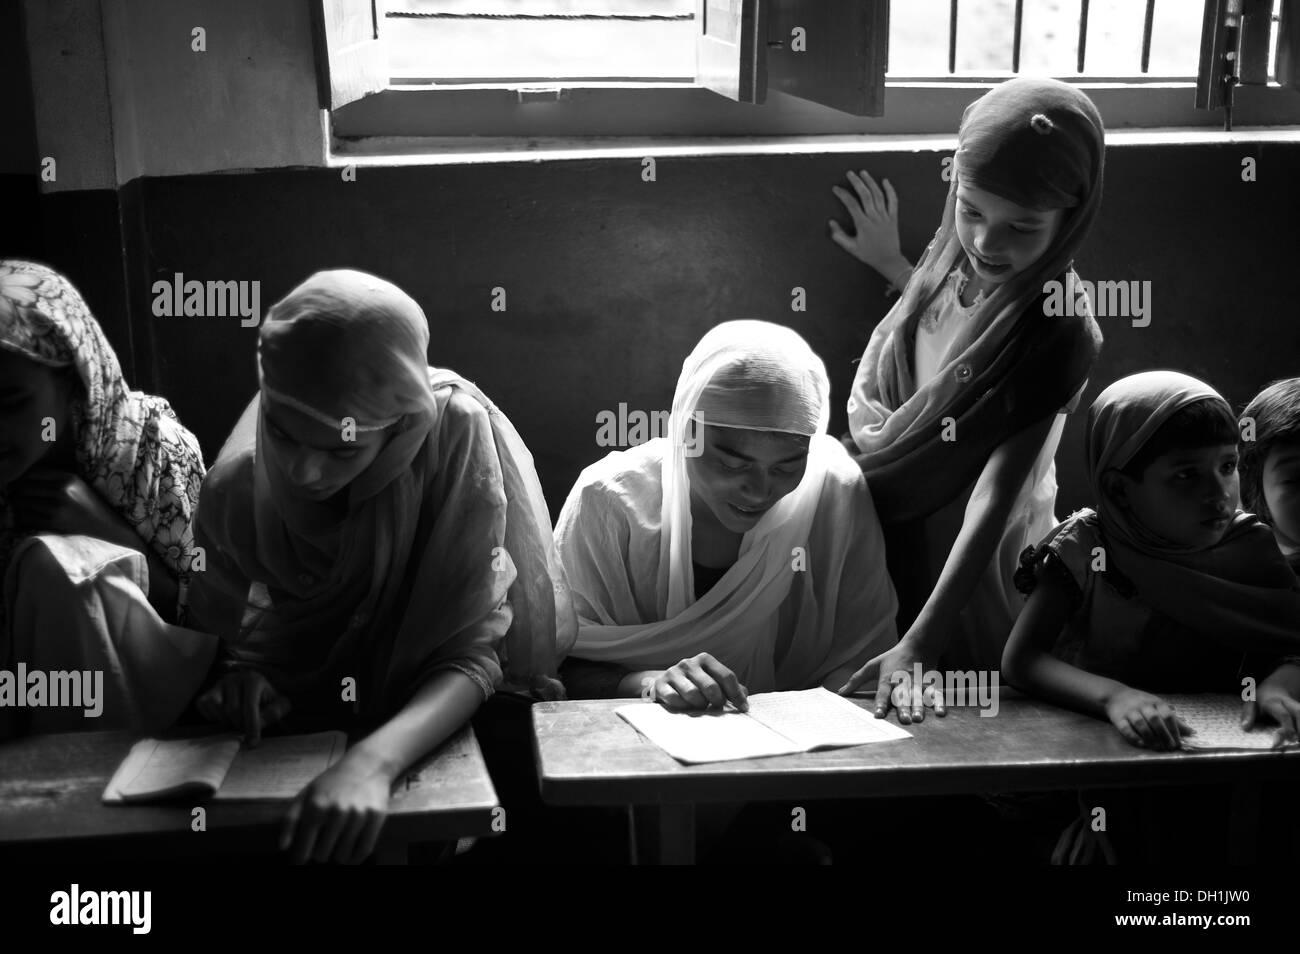 Muslim girls learning lessons at Islamic school uttar pradesh India Asia Stock Photo